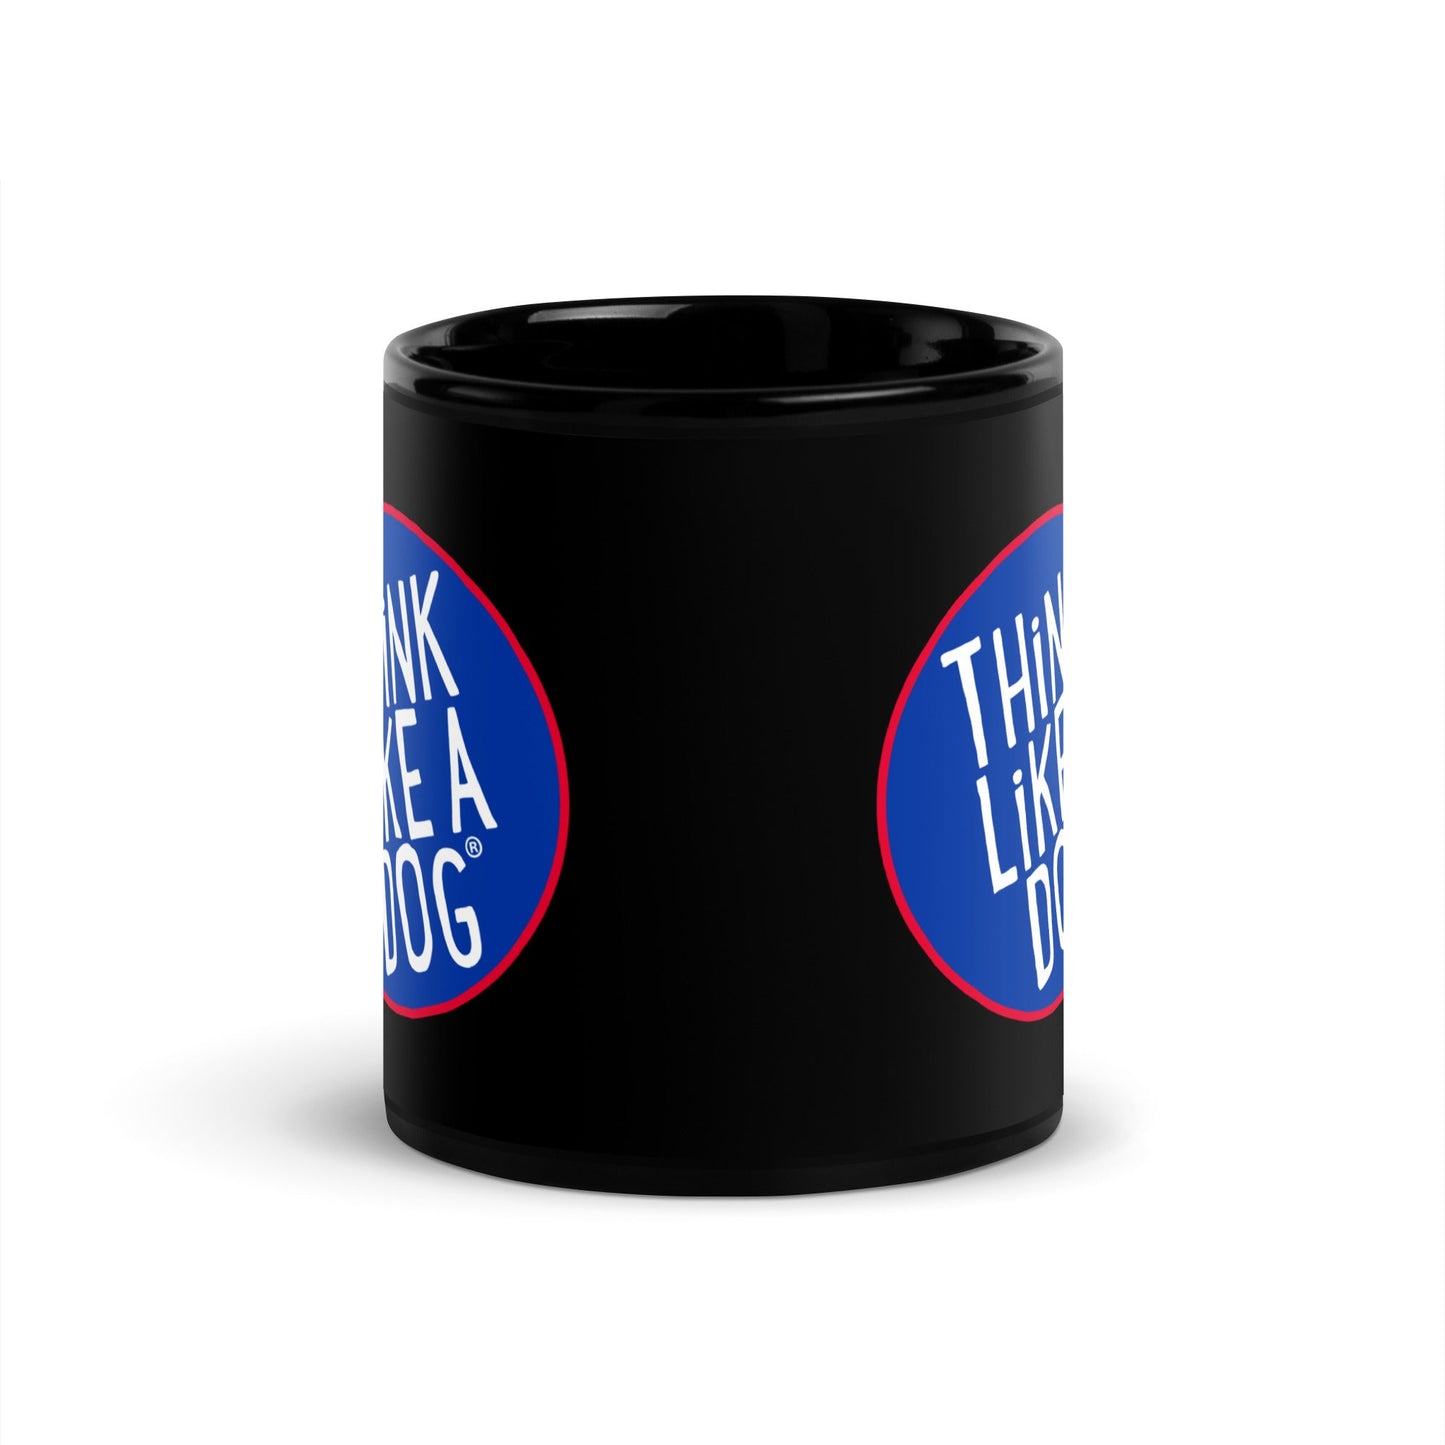 A THiNK LiKE A DOG® NASA Meatball Colorway Logo on Black Glossy Mug, perfect for dog lovers.